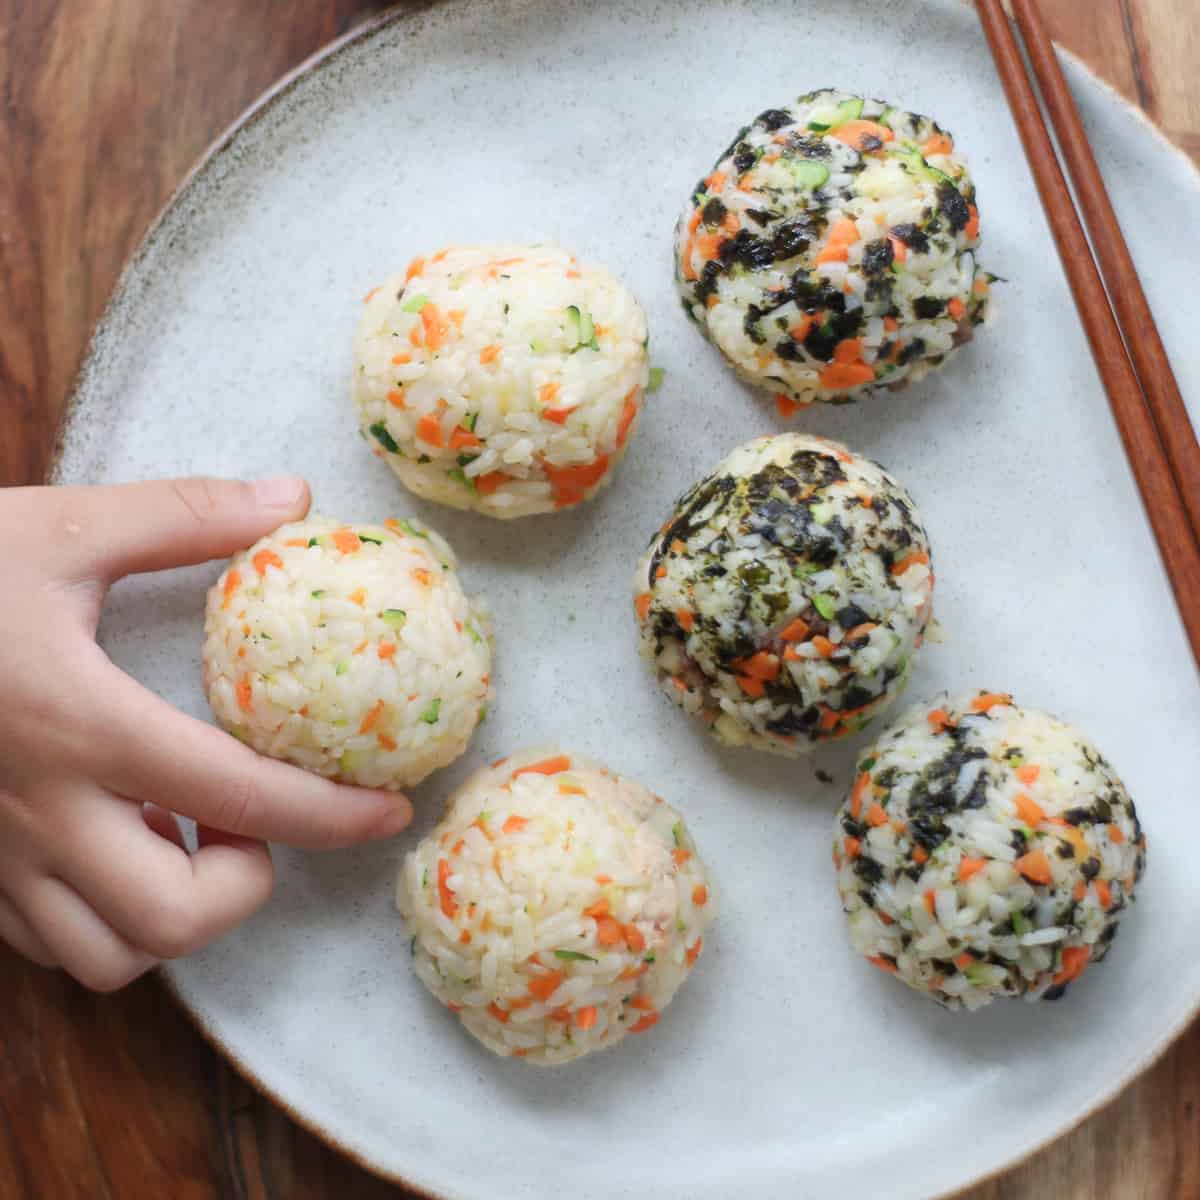 https://www.mjandhungryman.com/wp-content/uploads/2014/12/Korean-rice-balls.jpg